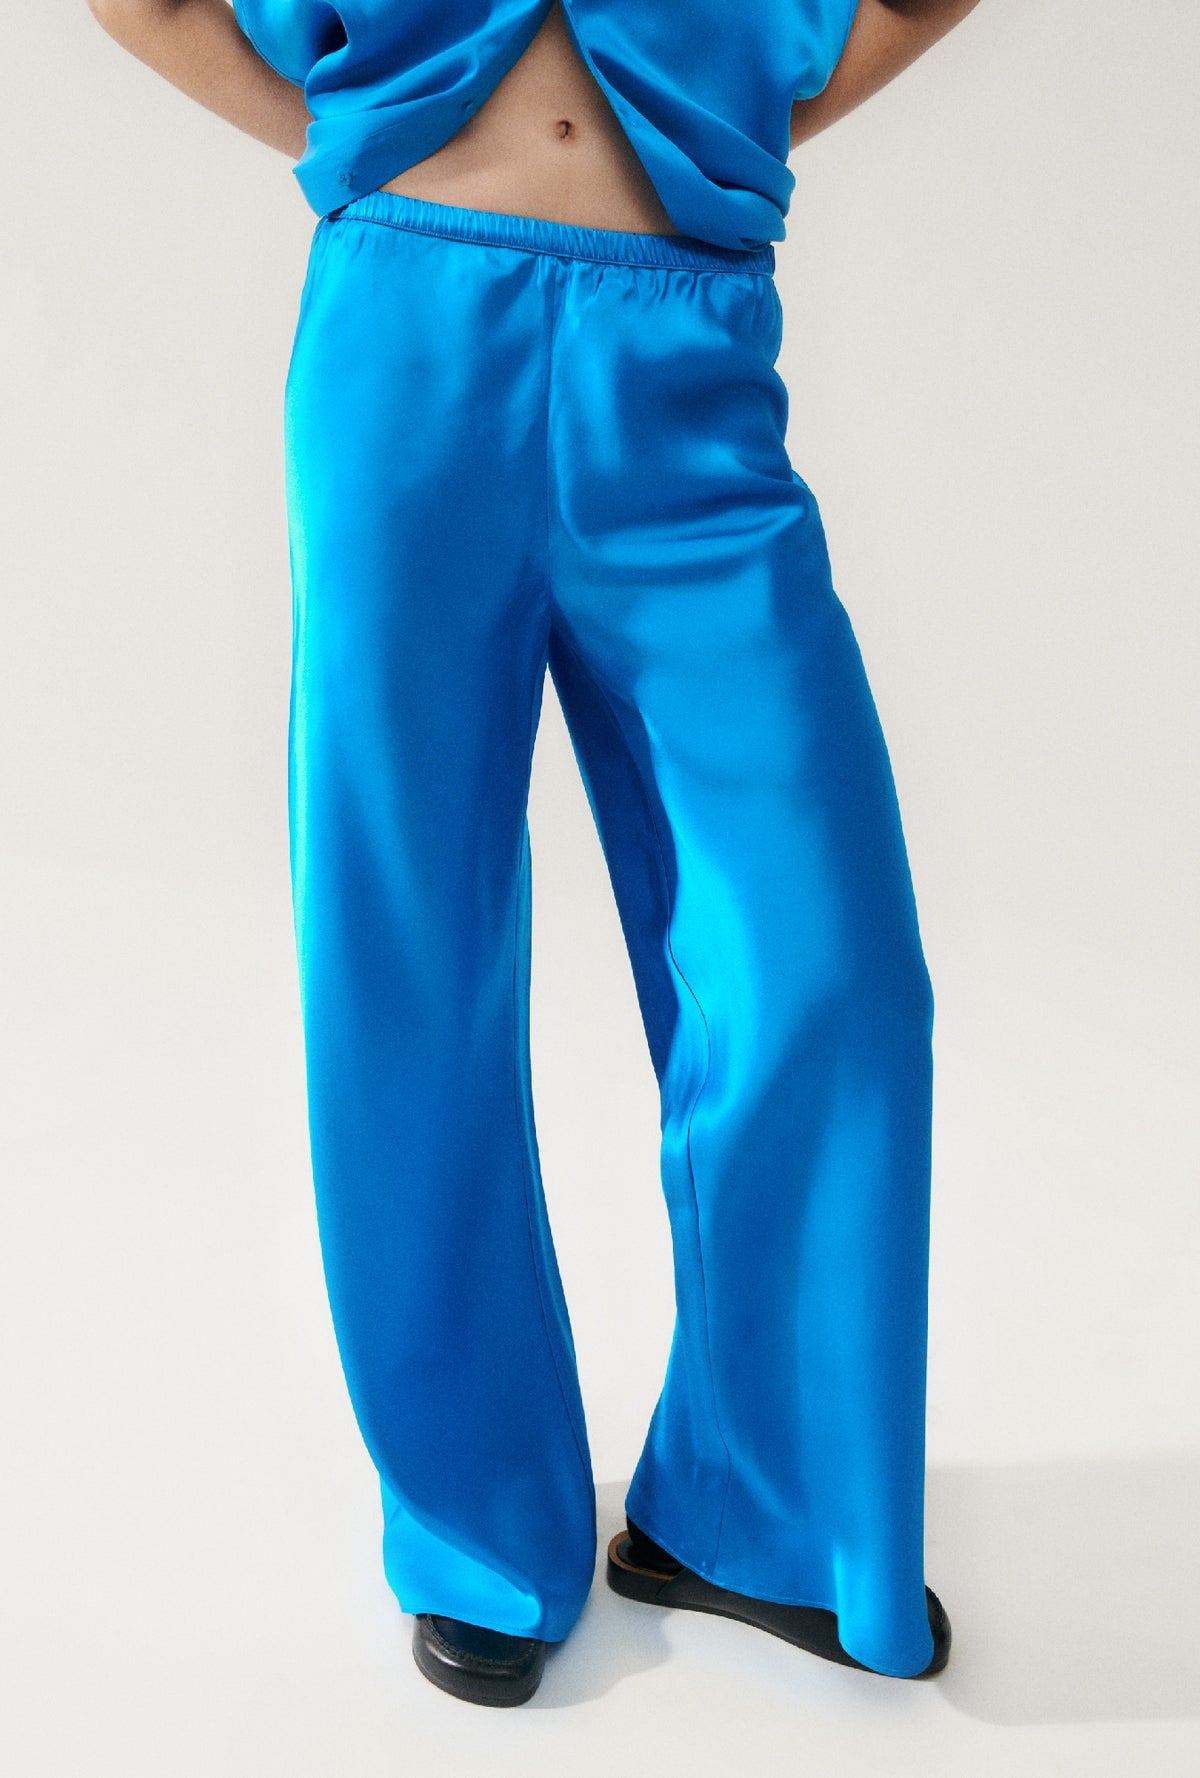 Silk Laundry | Bias Cut Pants - Coast Blue